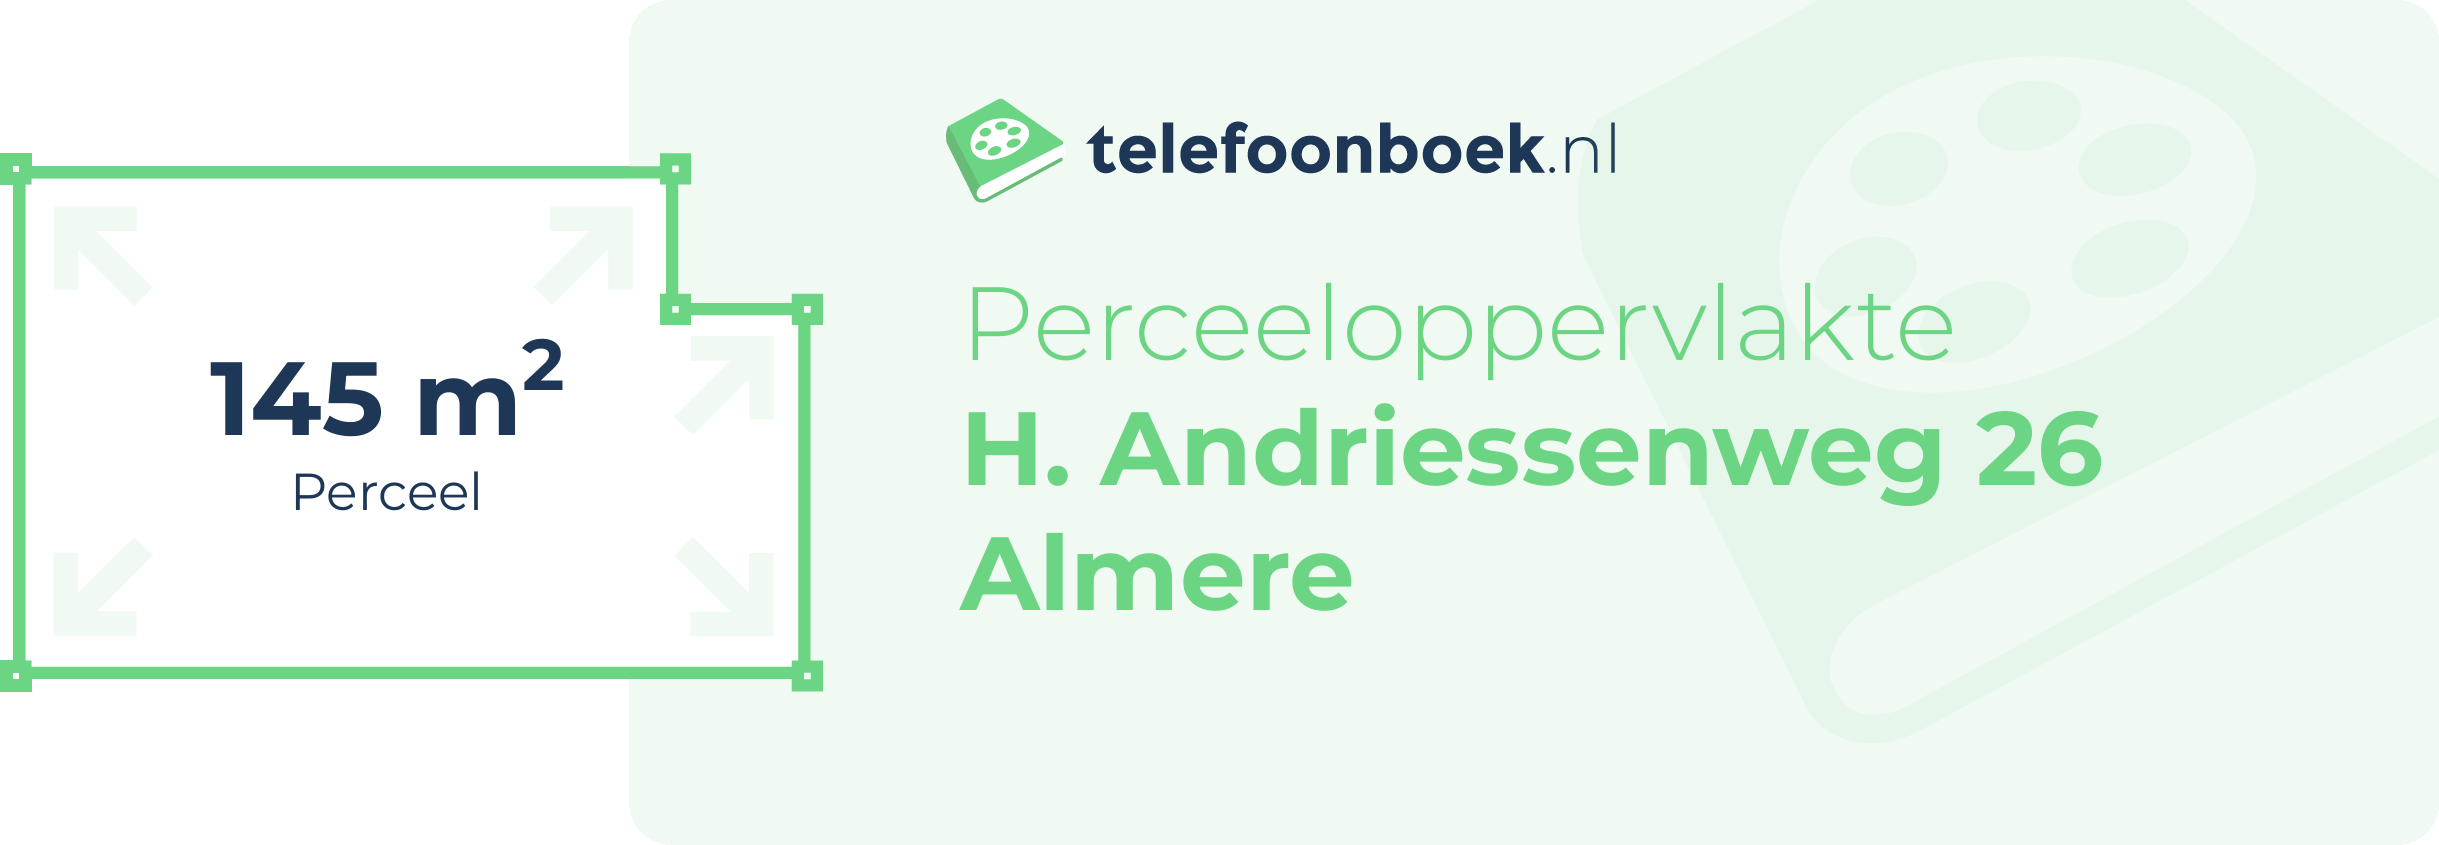 Perceeloppervlakte H. Andriessenweg 26 Almere